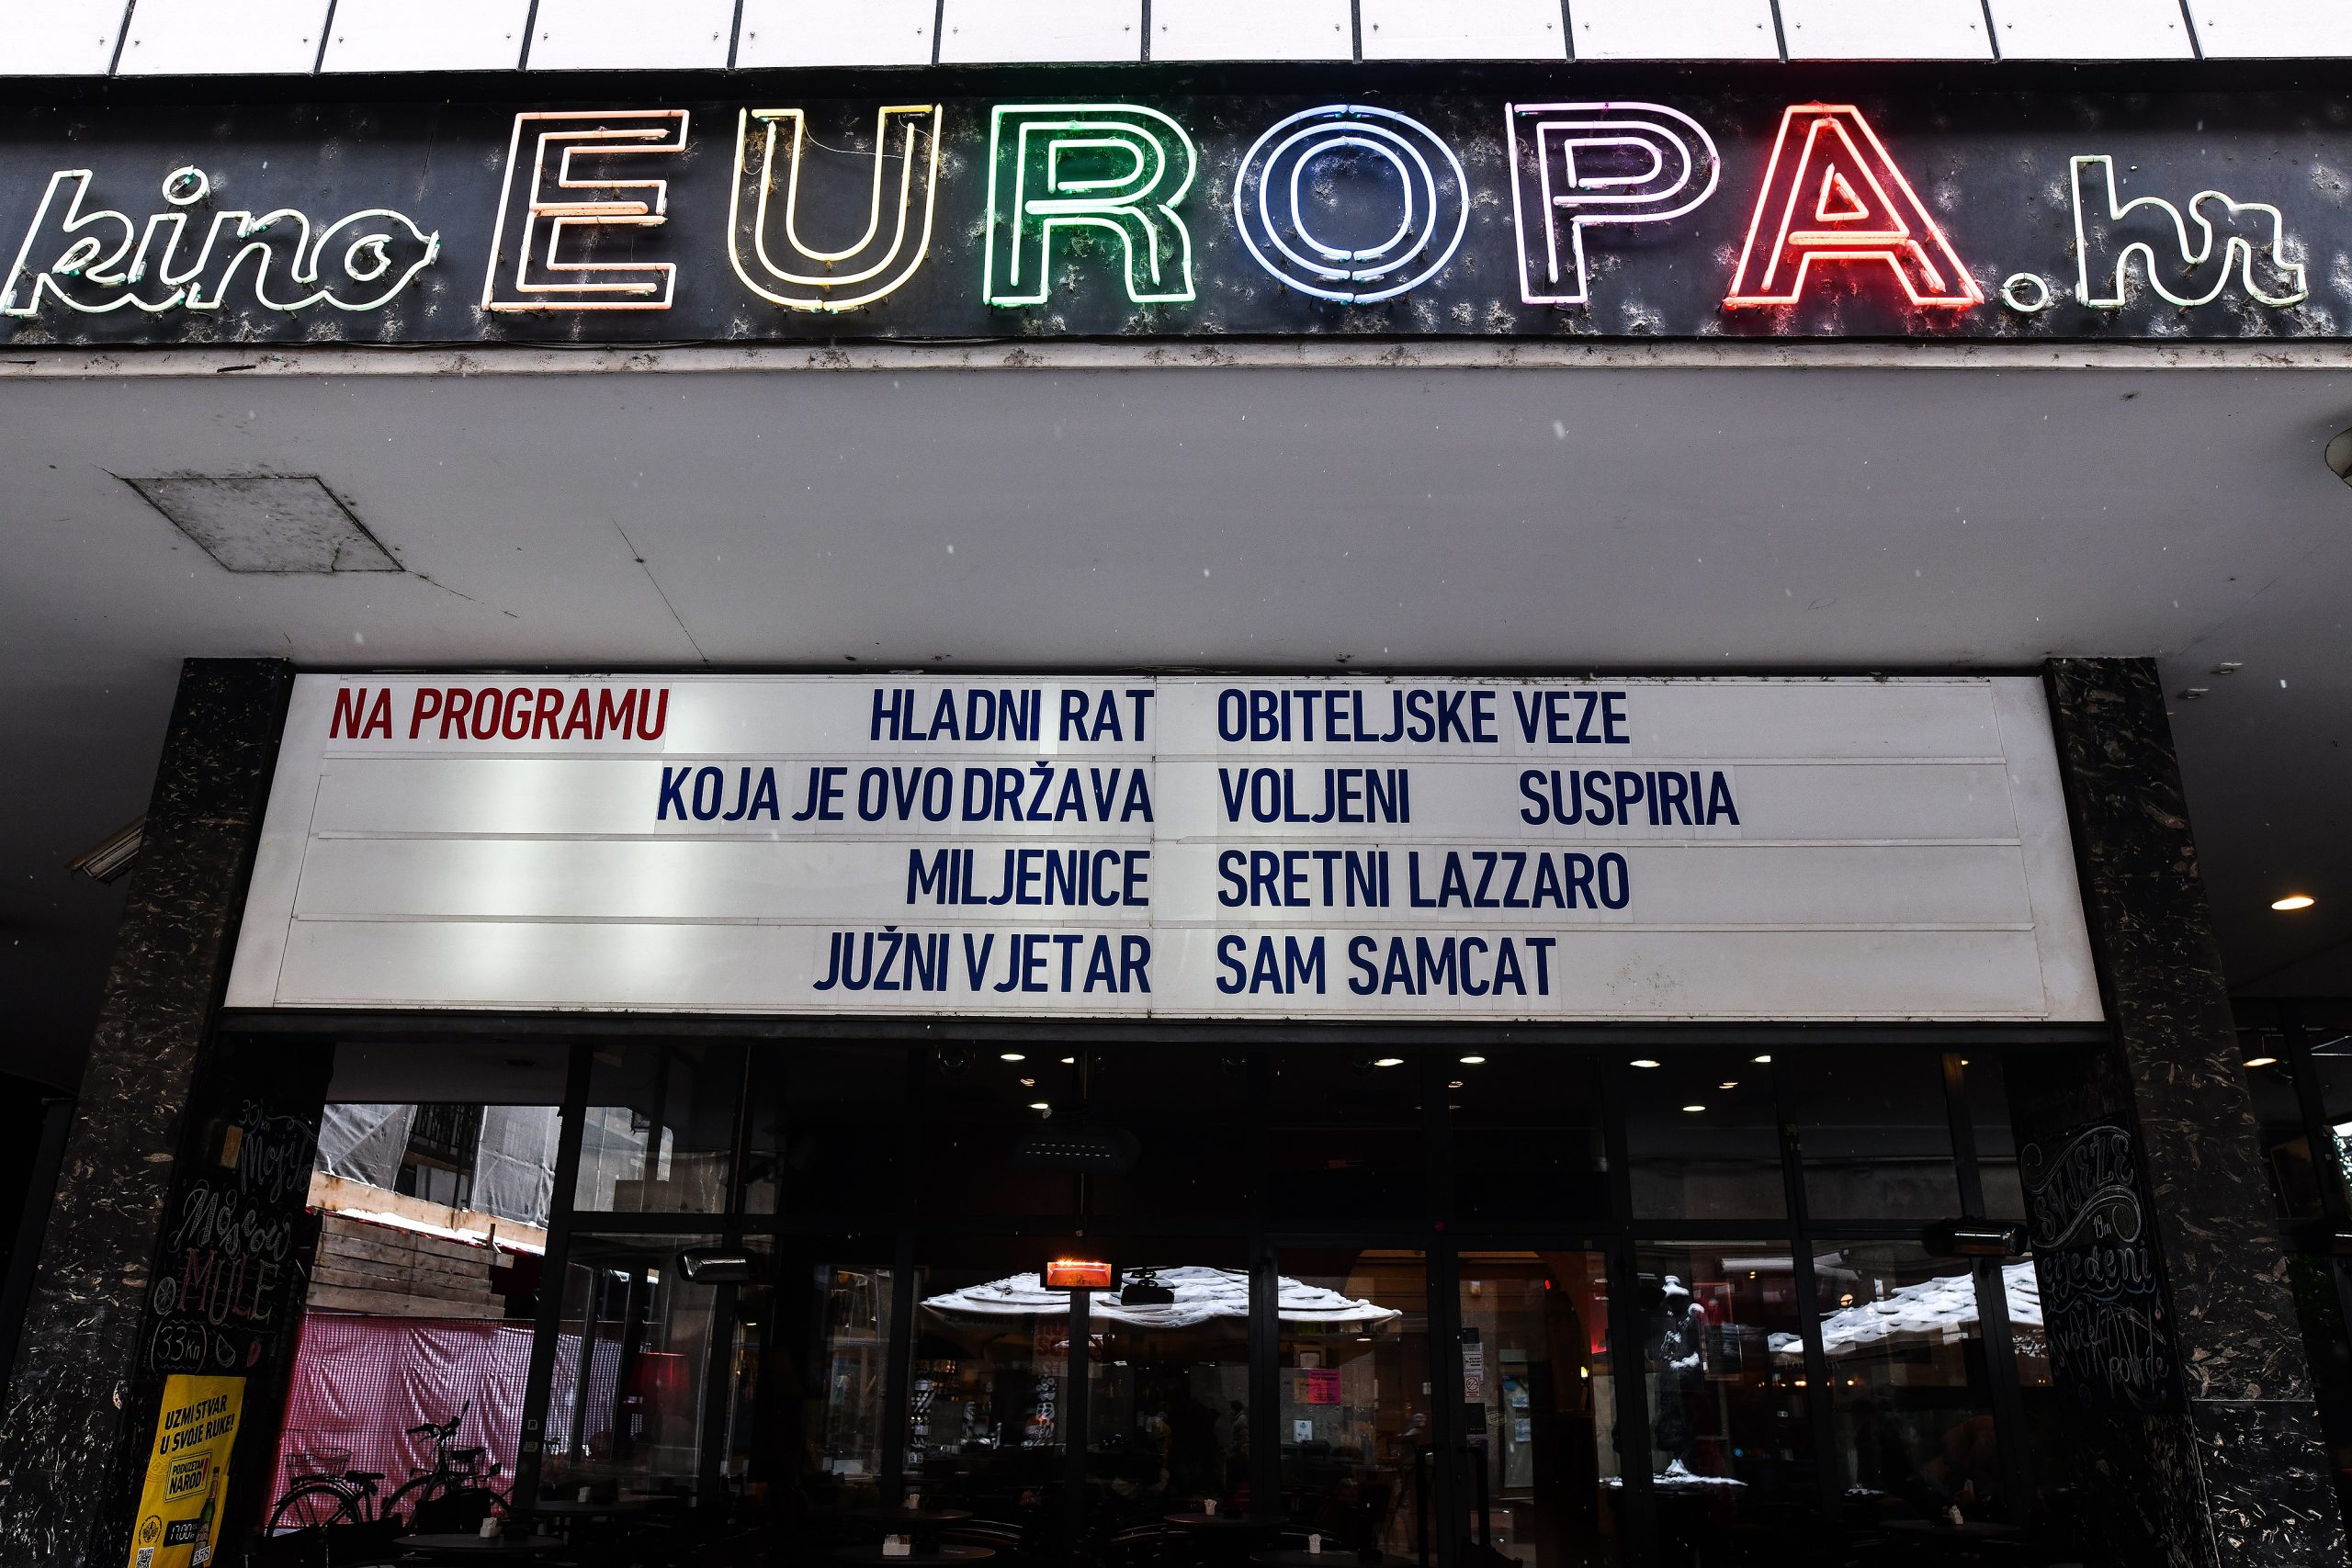 24.01.2019., Zagreb-  Kino Europa.
Photo: Sandra Simunovic/PIXSELL